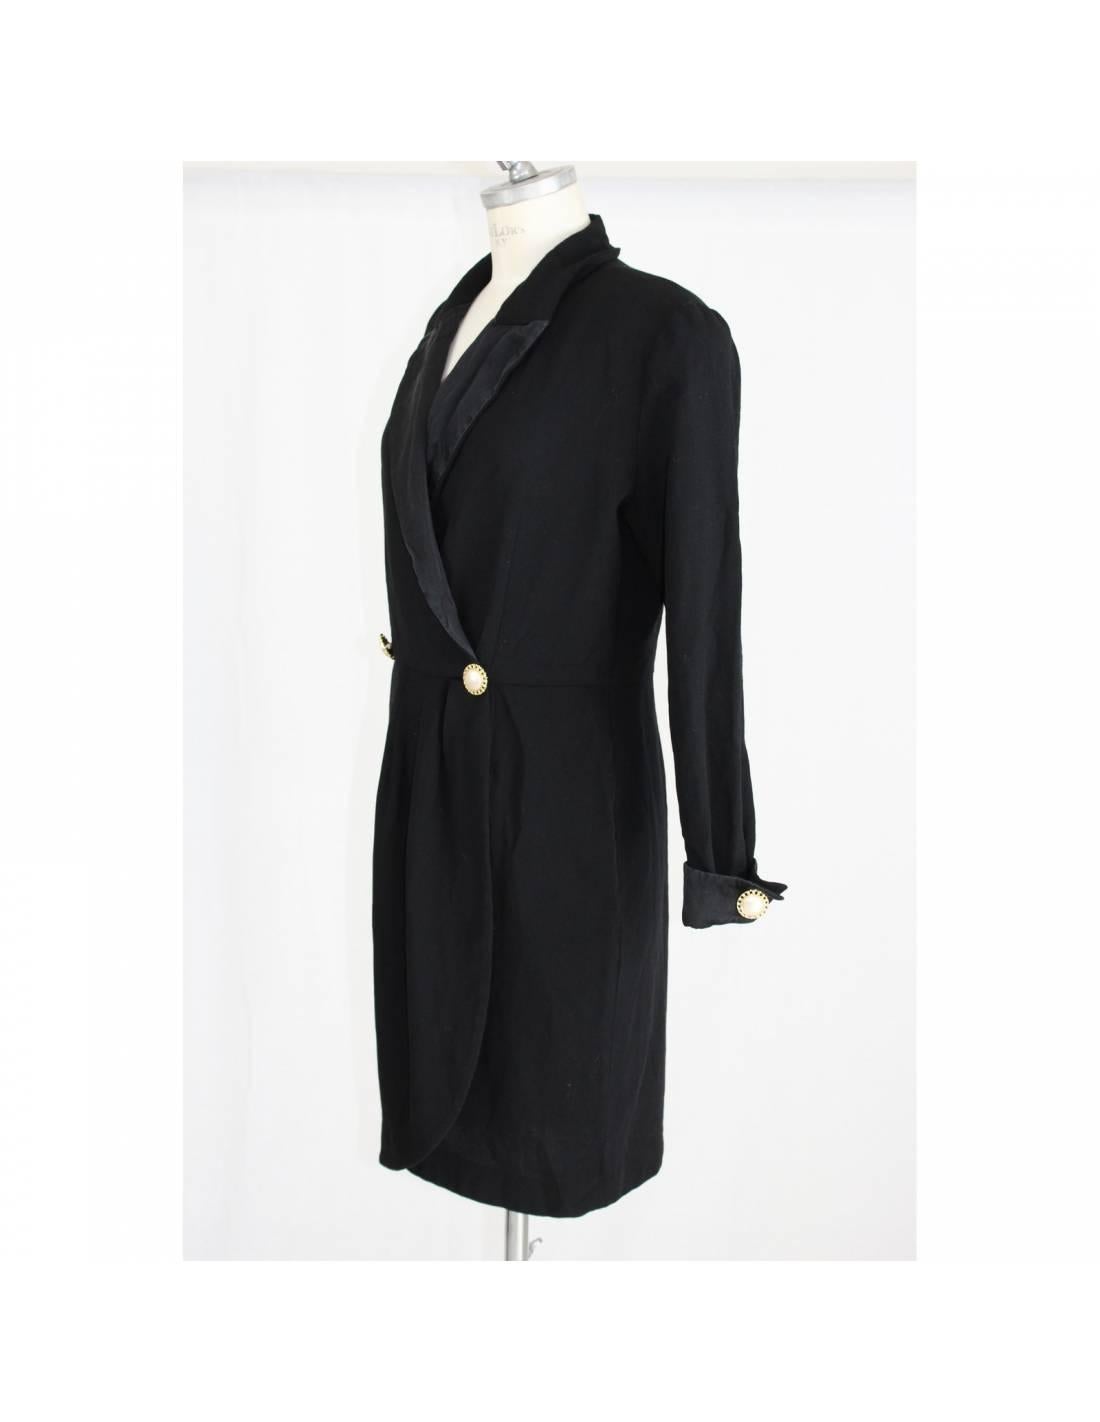 Cherie De Paris Black Wool Evening Sheath Vintage Dress In Excellent Condition For Sale In Brindisi, Bt